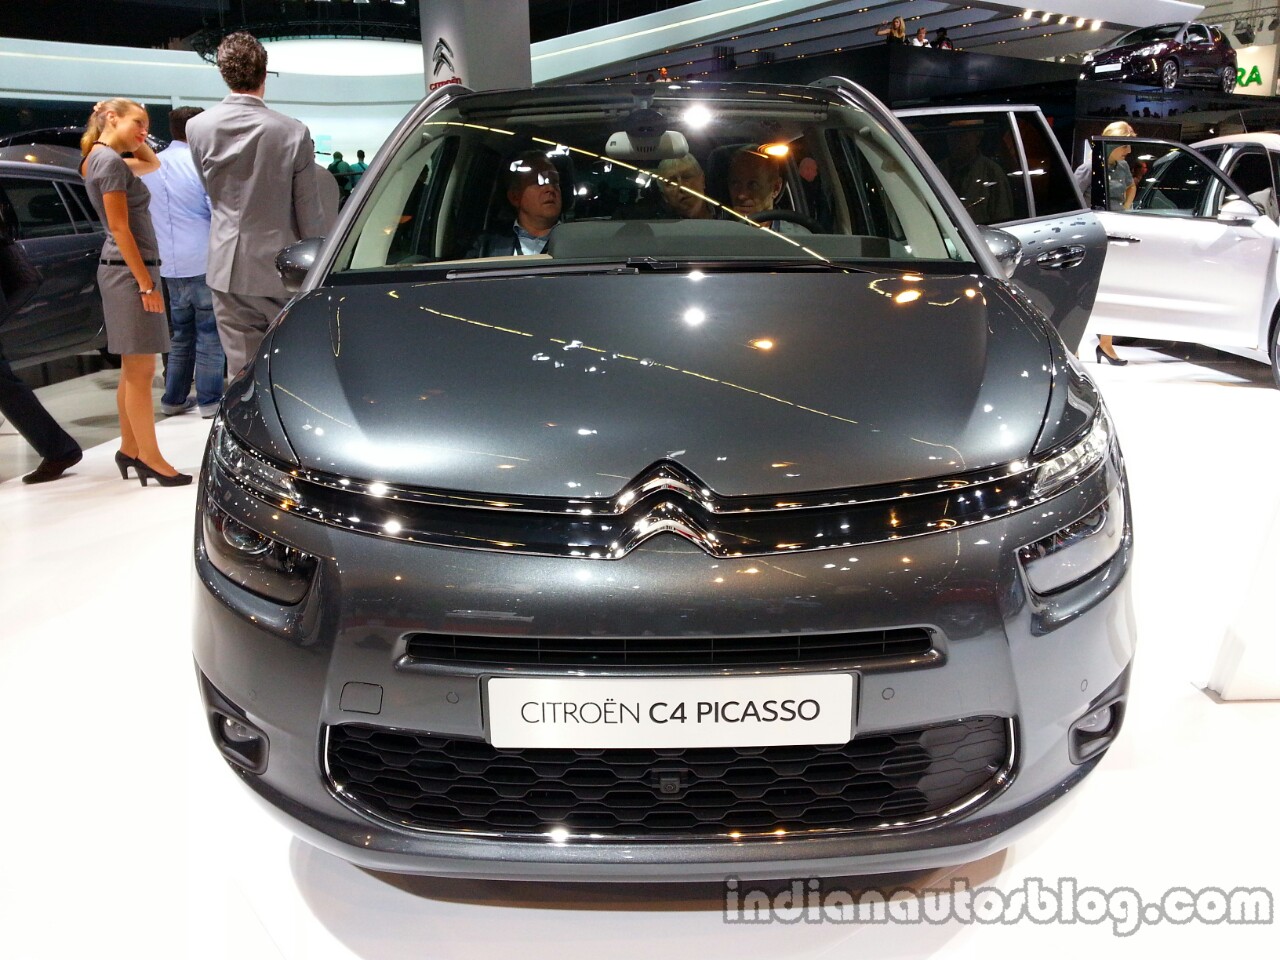 New Citroën C4 Grand Picasso revealed